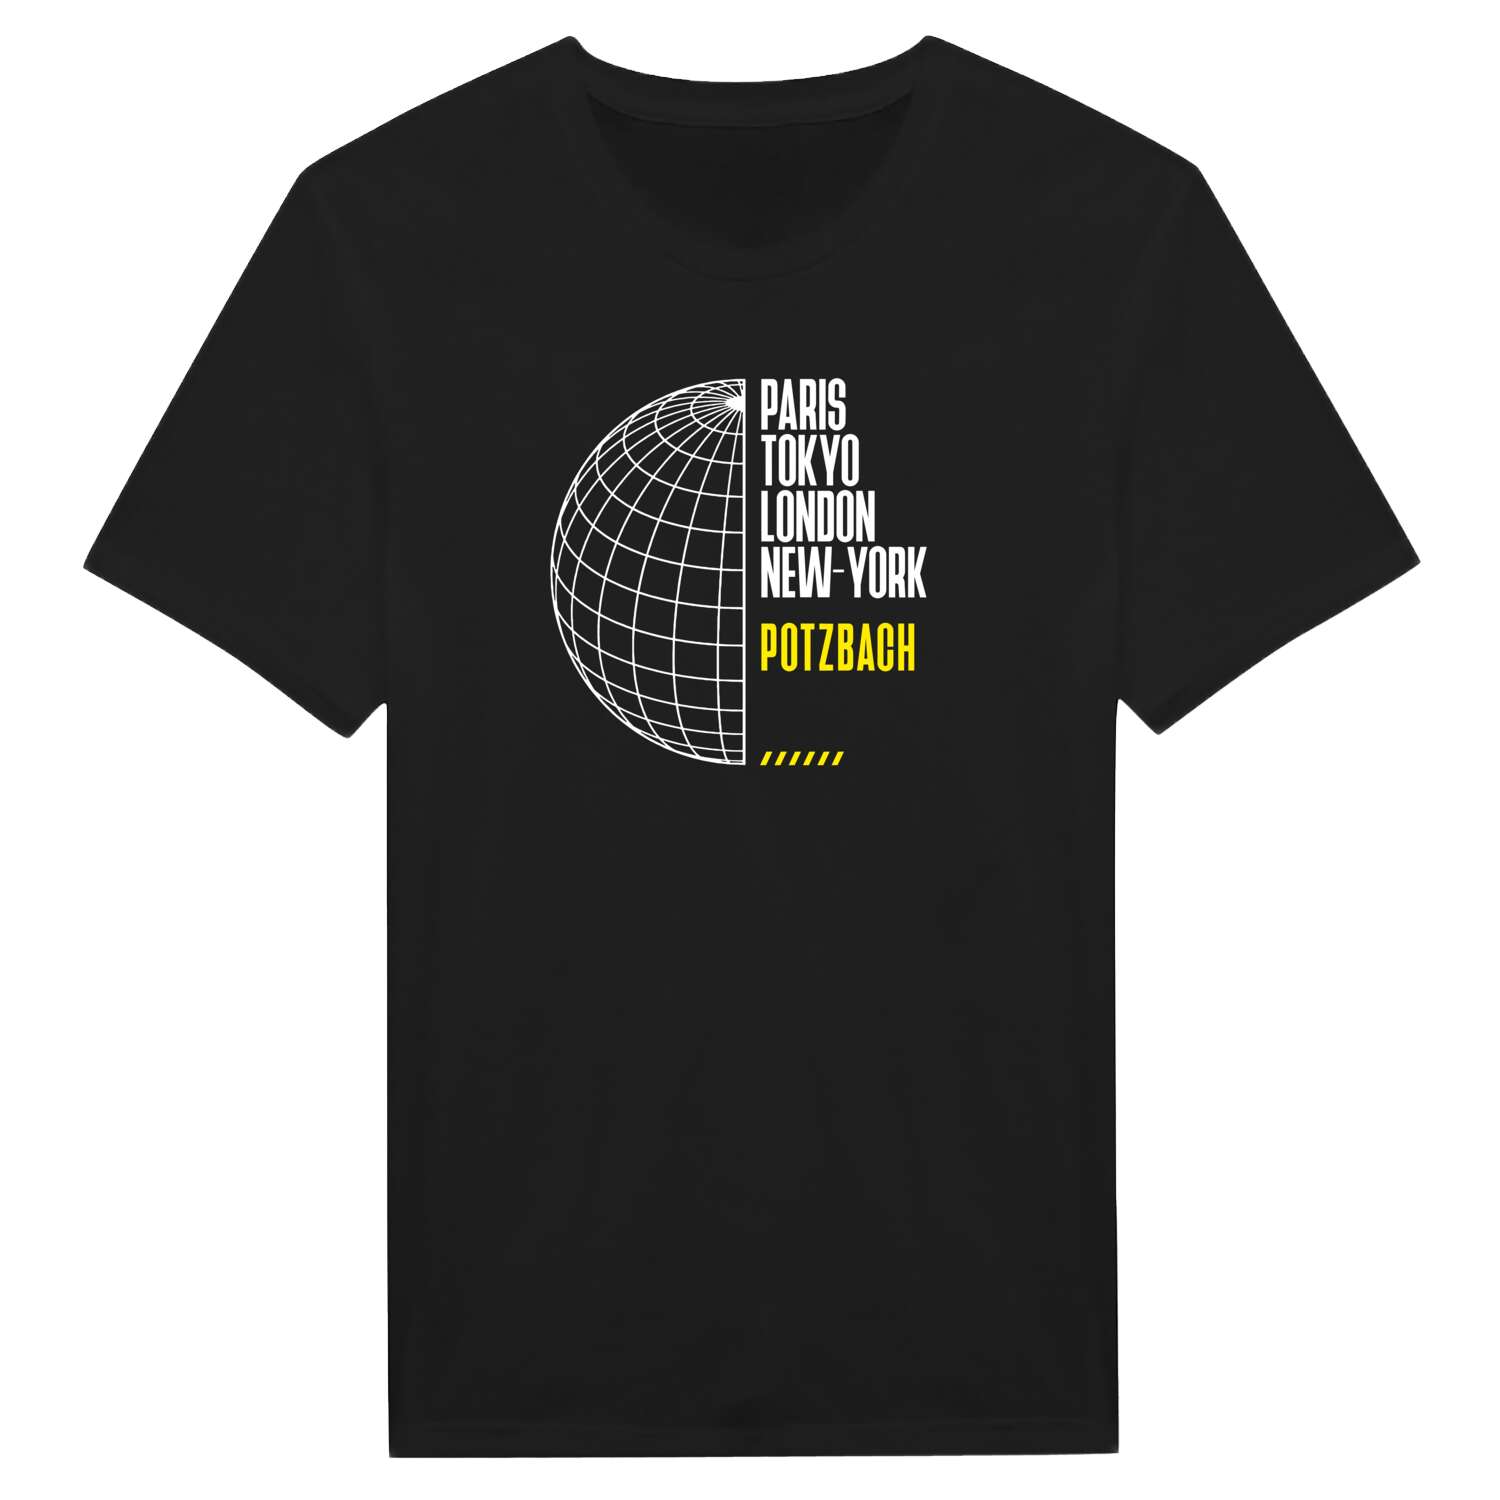 Potzbach T-Shirt »Paris Tokyo London«